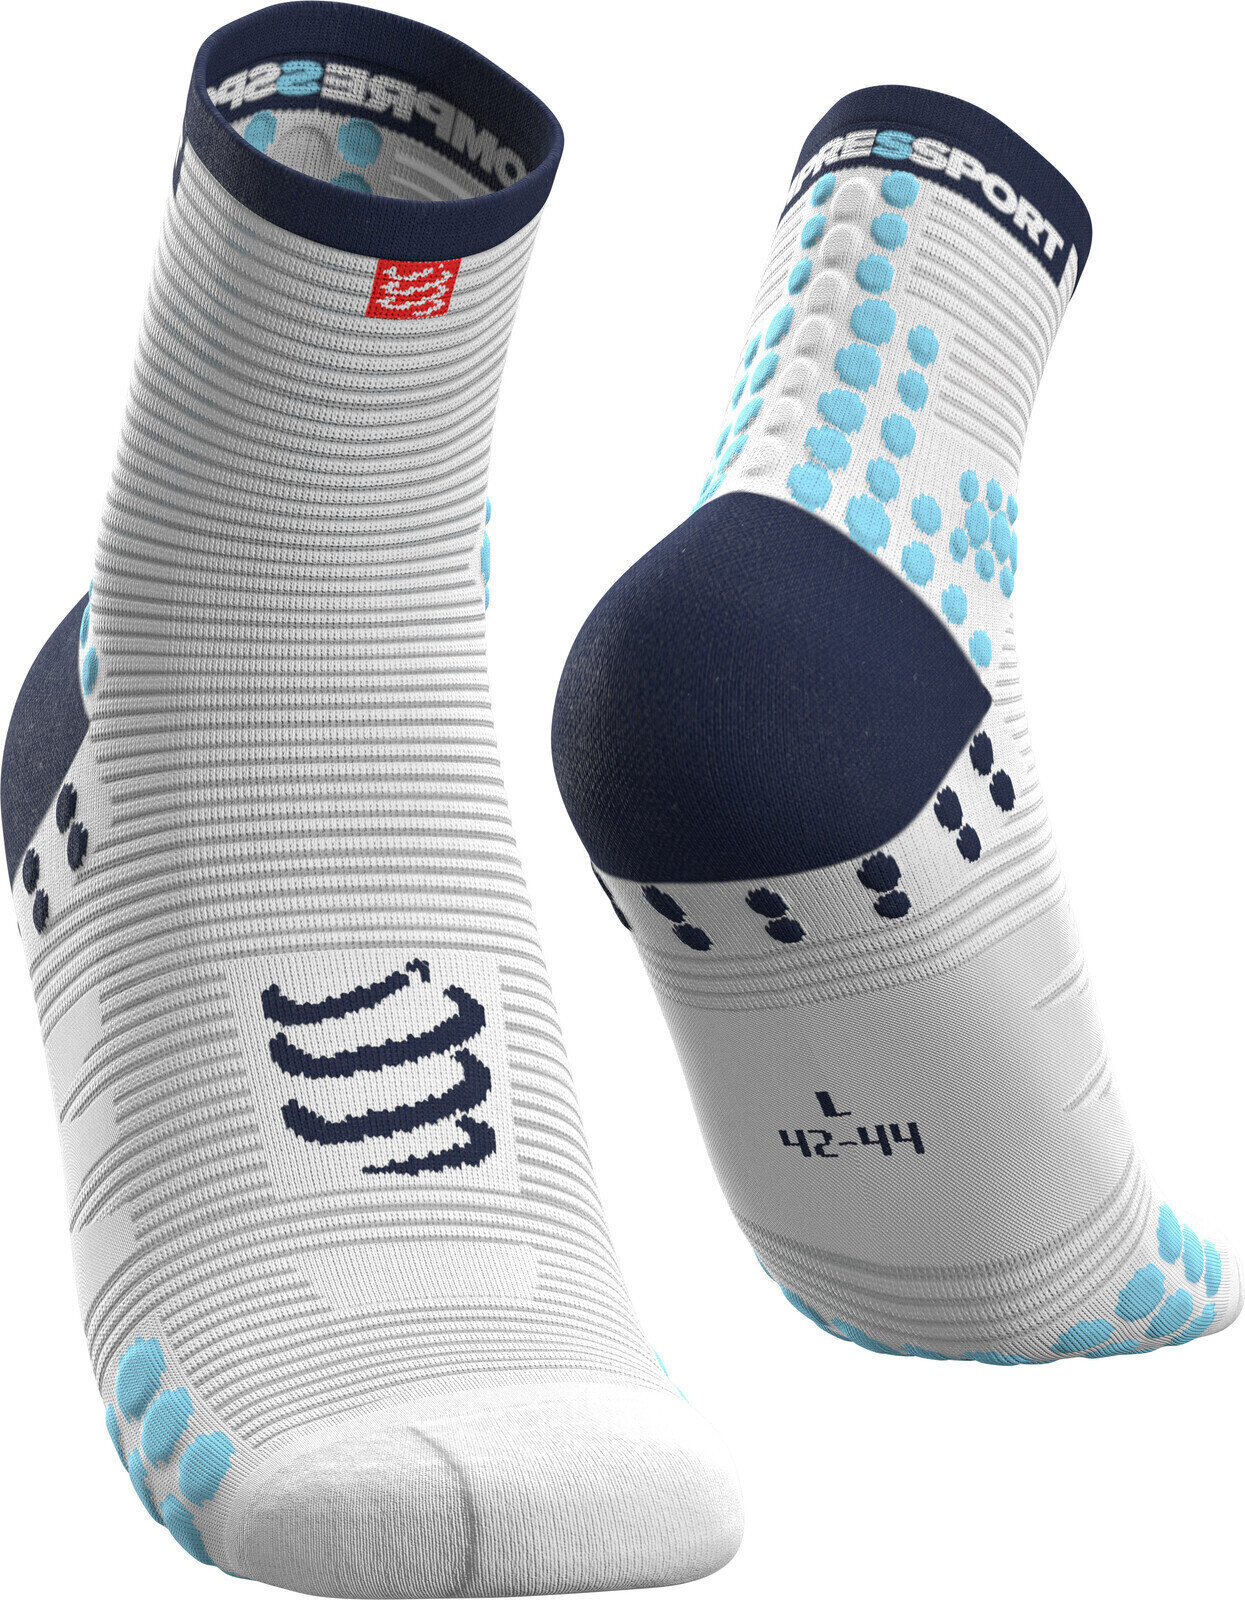 Running socks
 Compressport Pro Racing v3.0 Run High White-Blue T1 Running socks